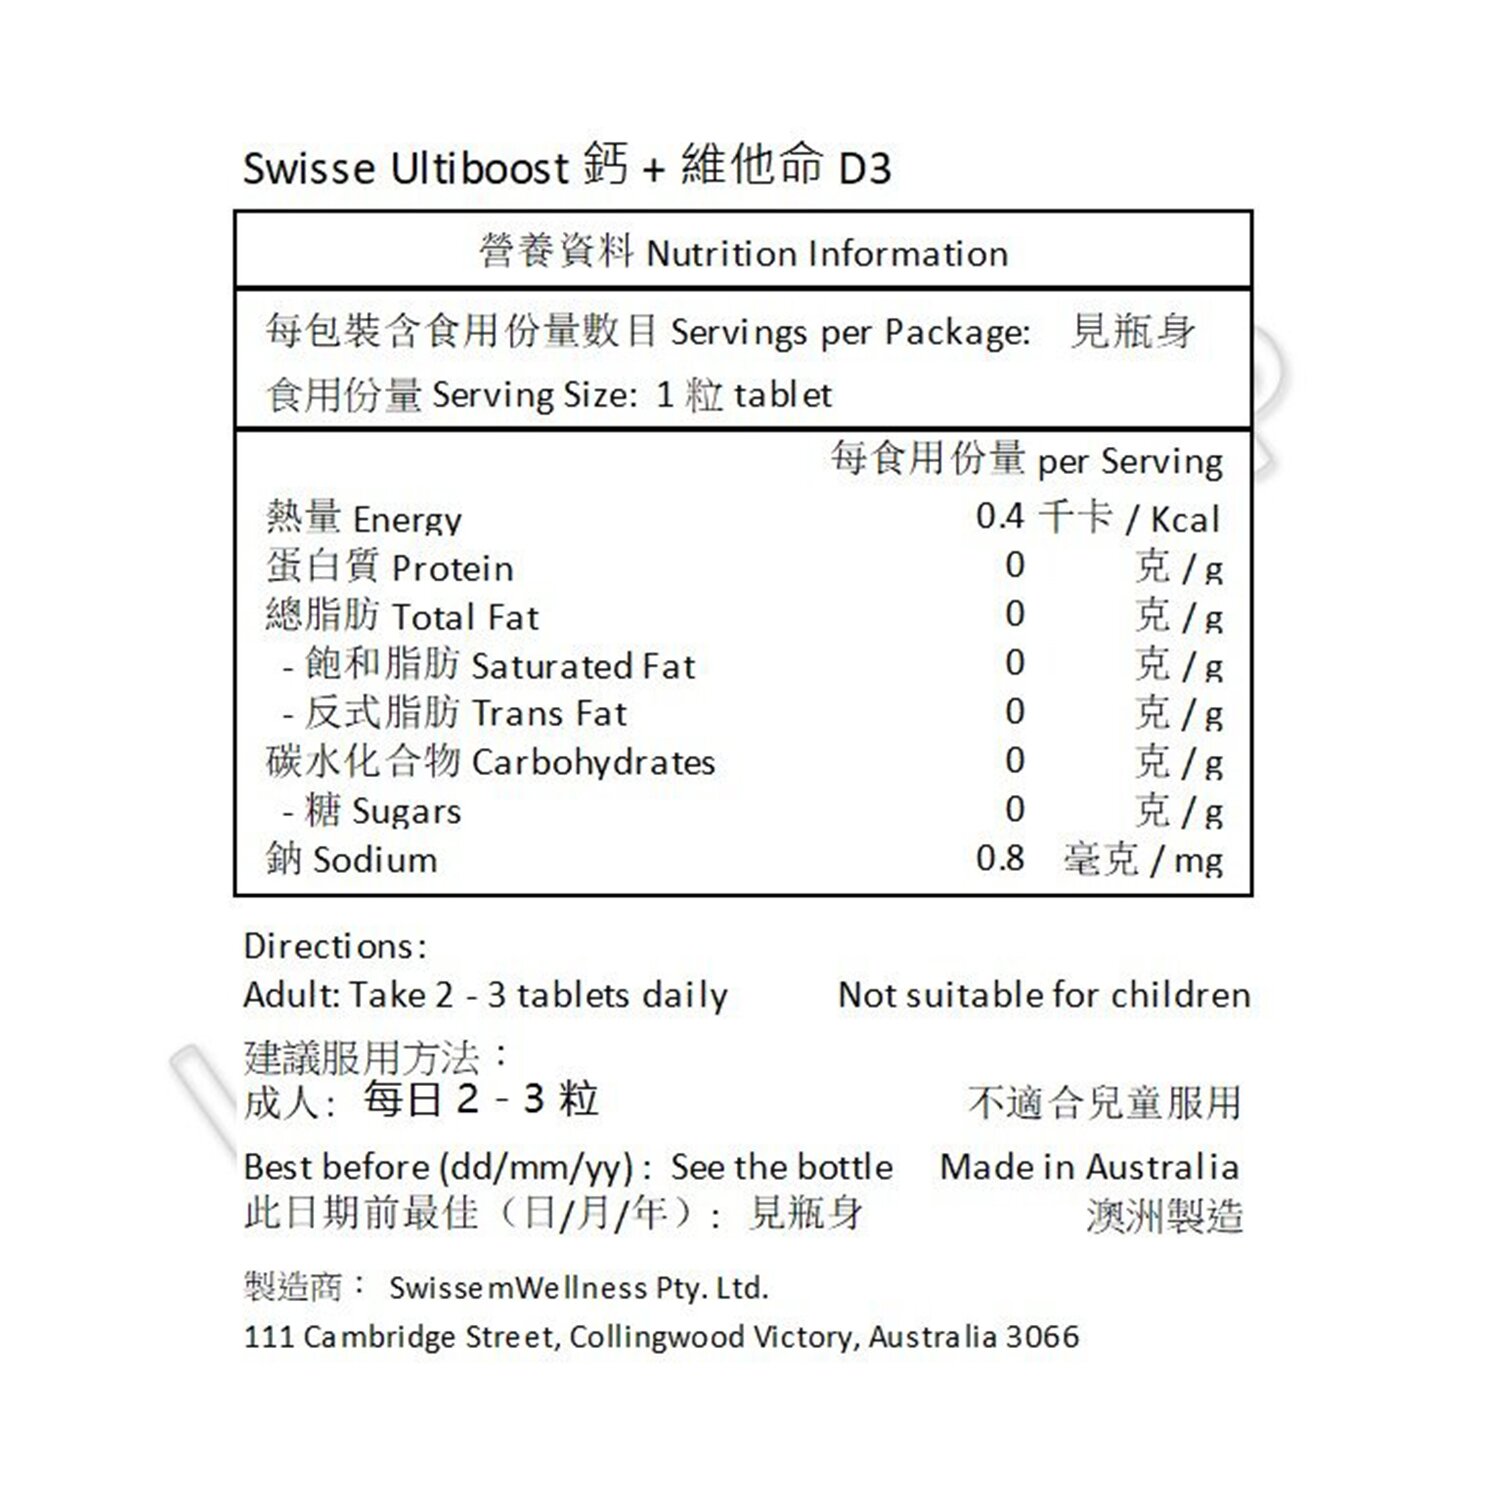 Swisse Ultiboost Calcium + Vitamin D 150 Tablets [Parallel Import] 150 Tablets